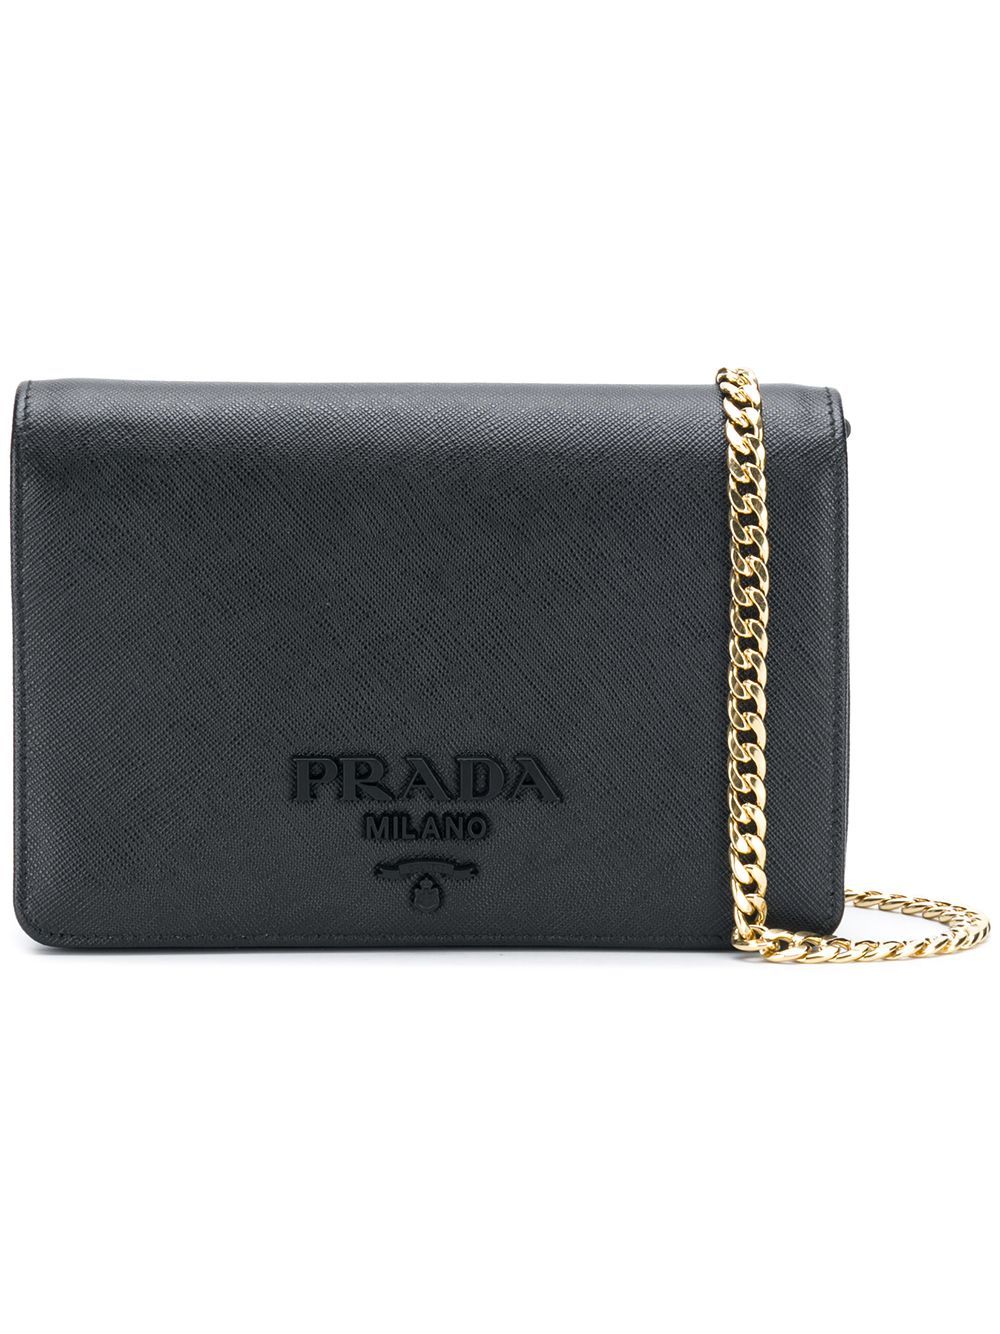 Prada chain wallet - Black | FarFetch Global